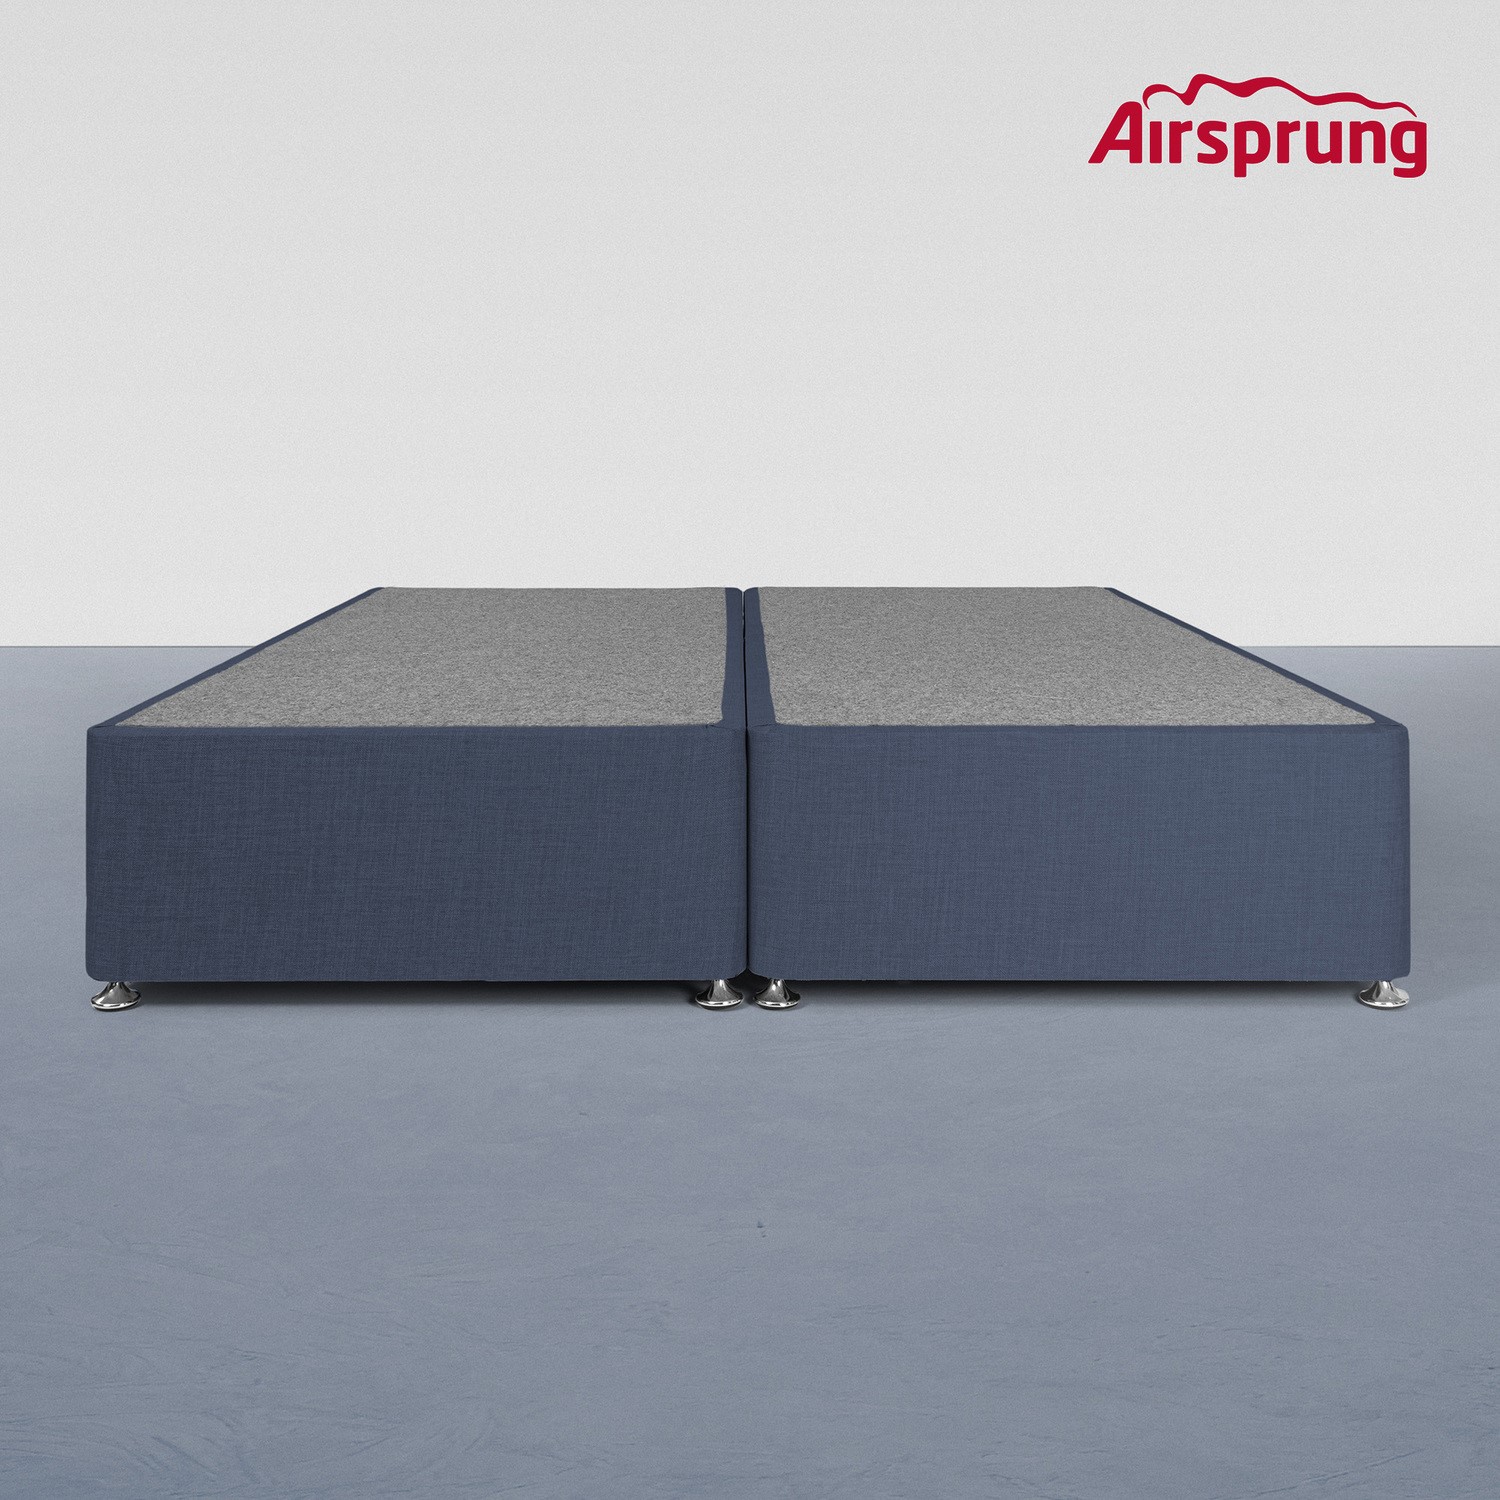 Read more about Airsprung kelston super king 4 drawer divan midnight blue